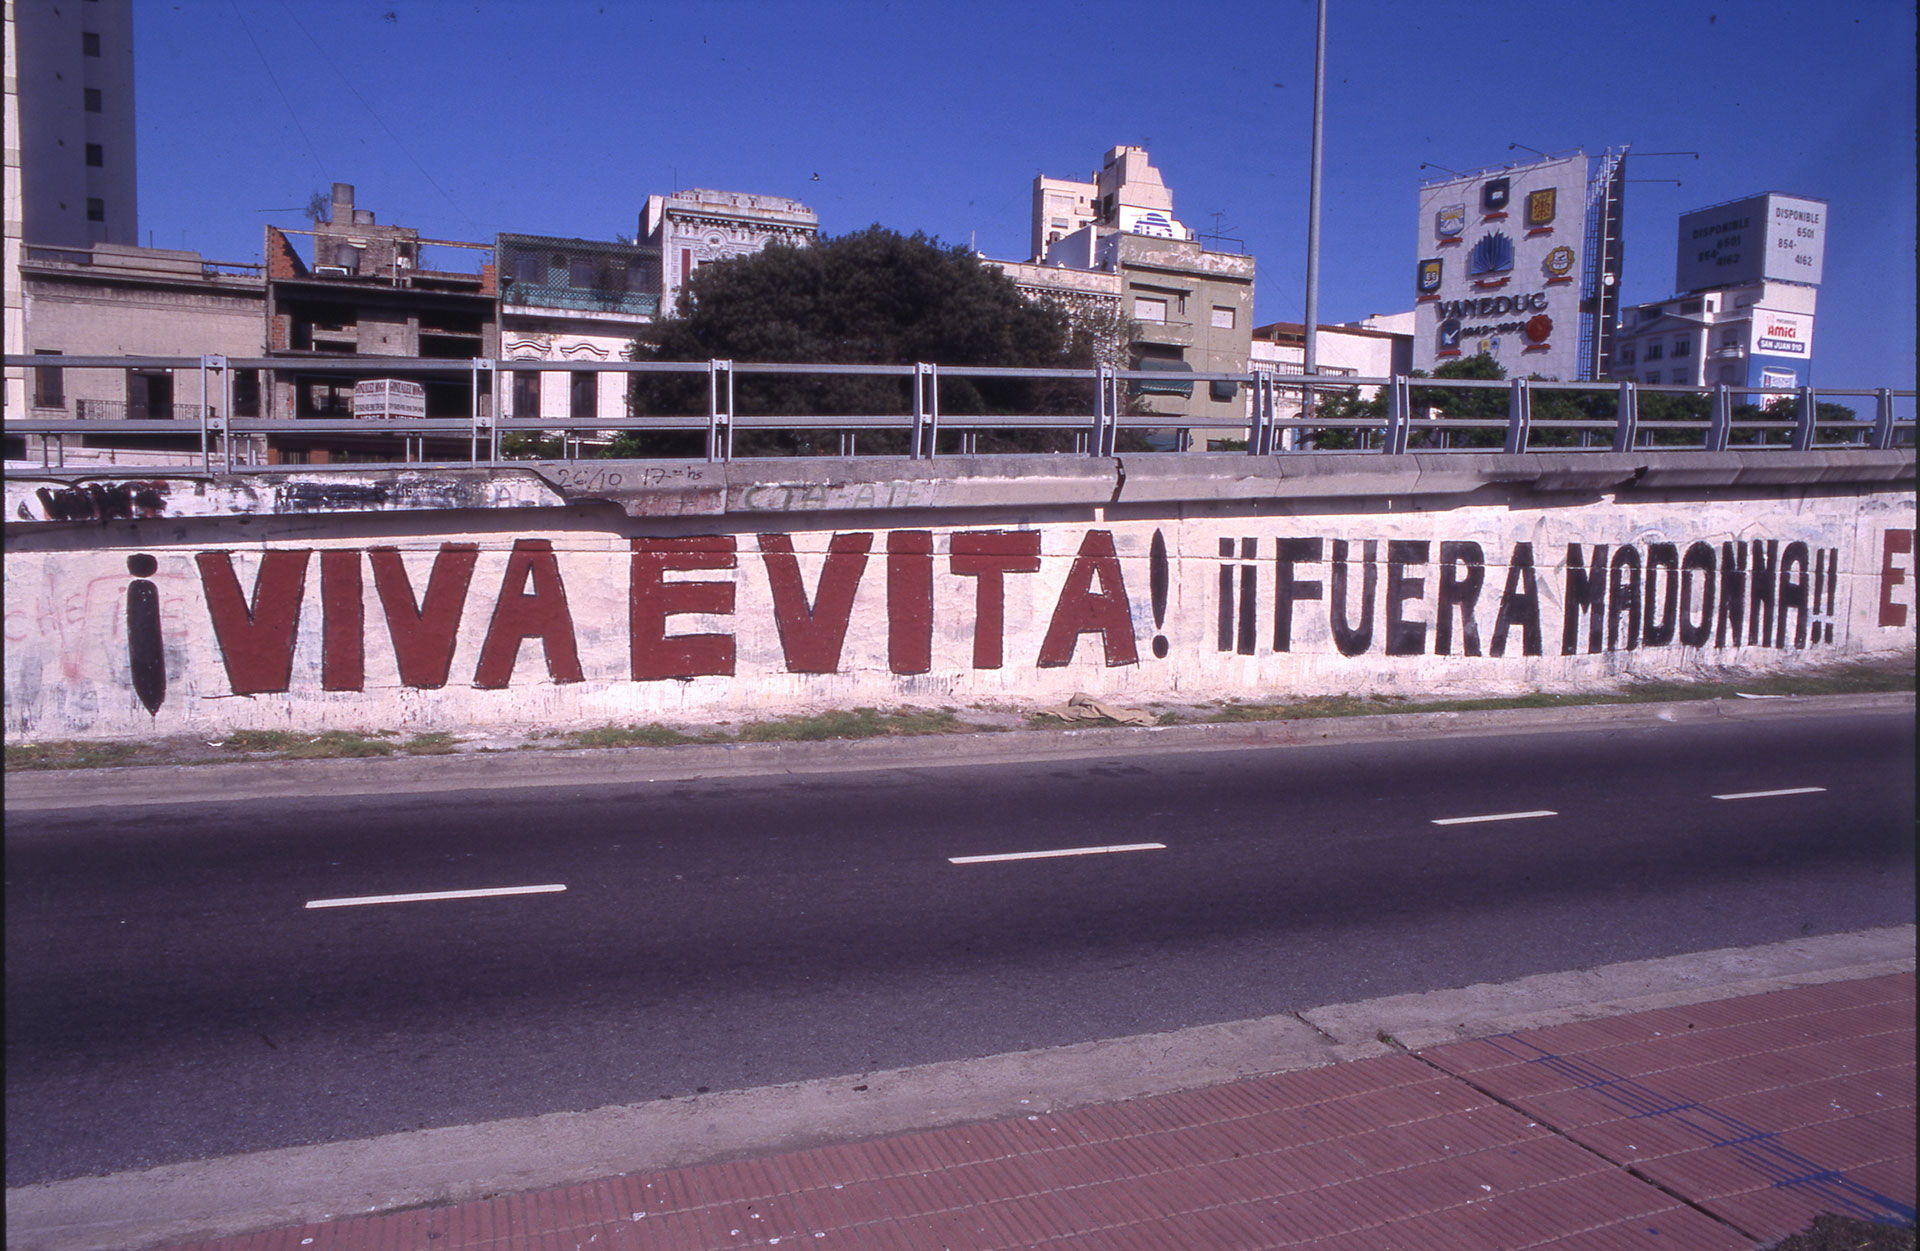 "Viva Evita. Afuera Madonna"